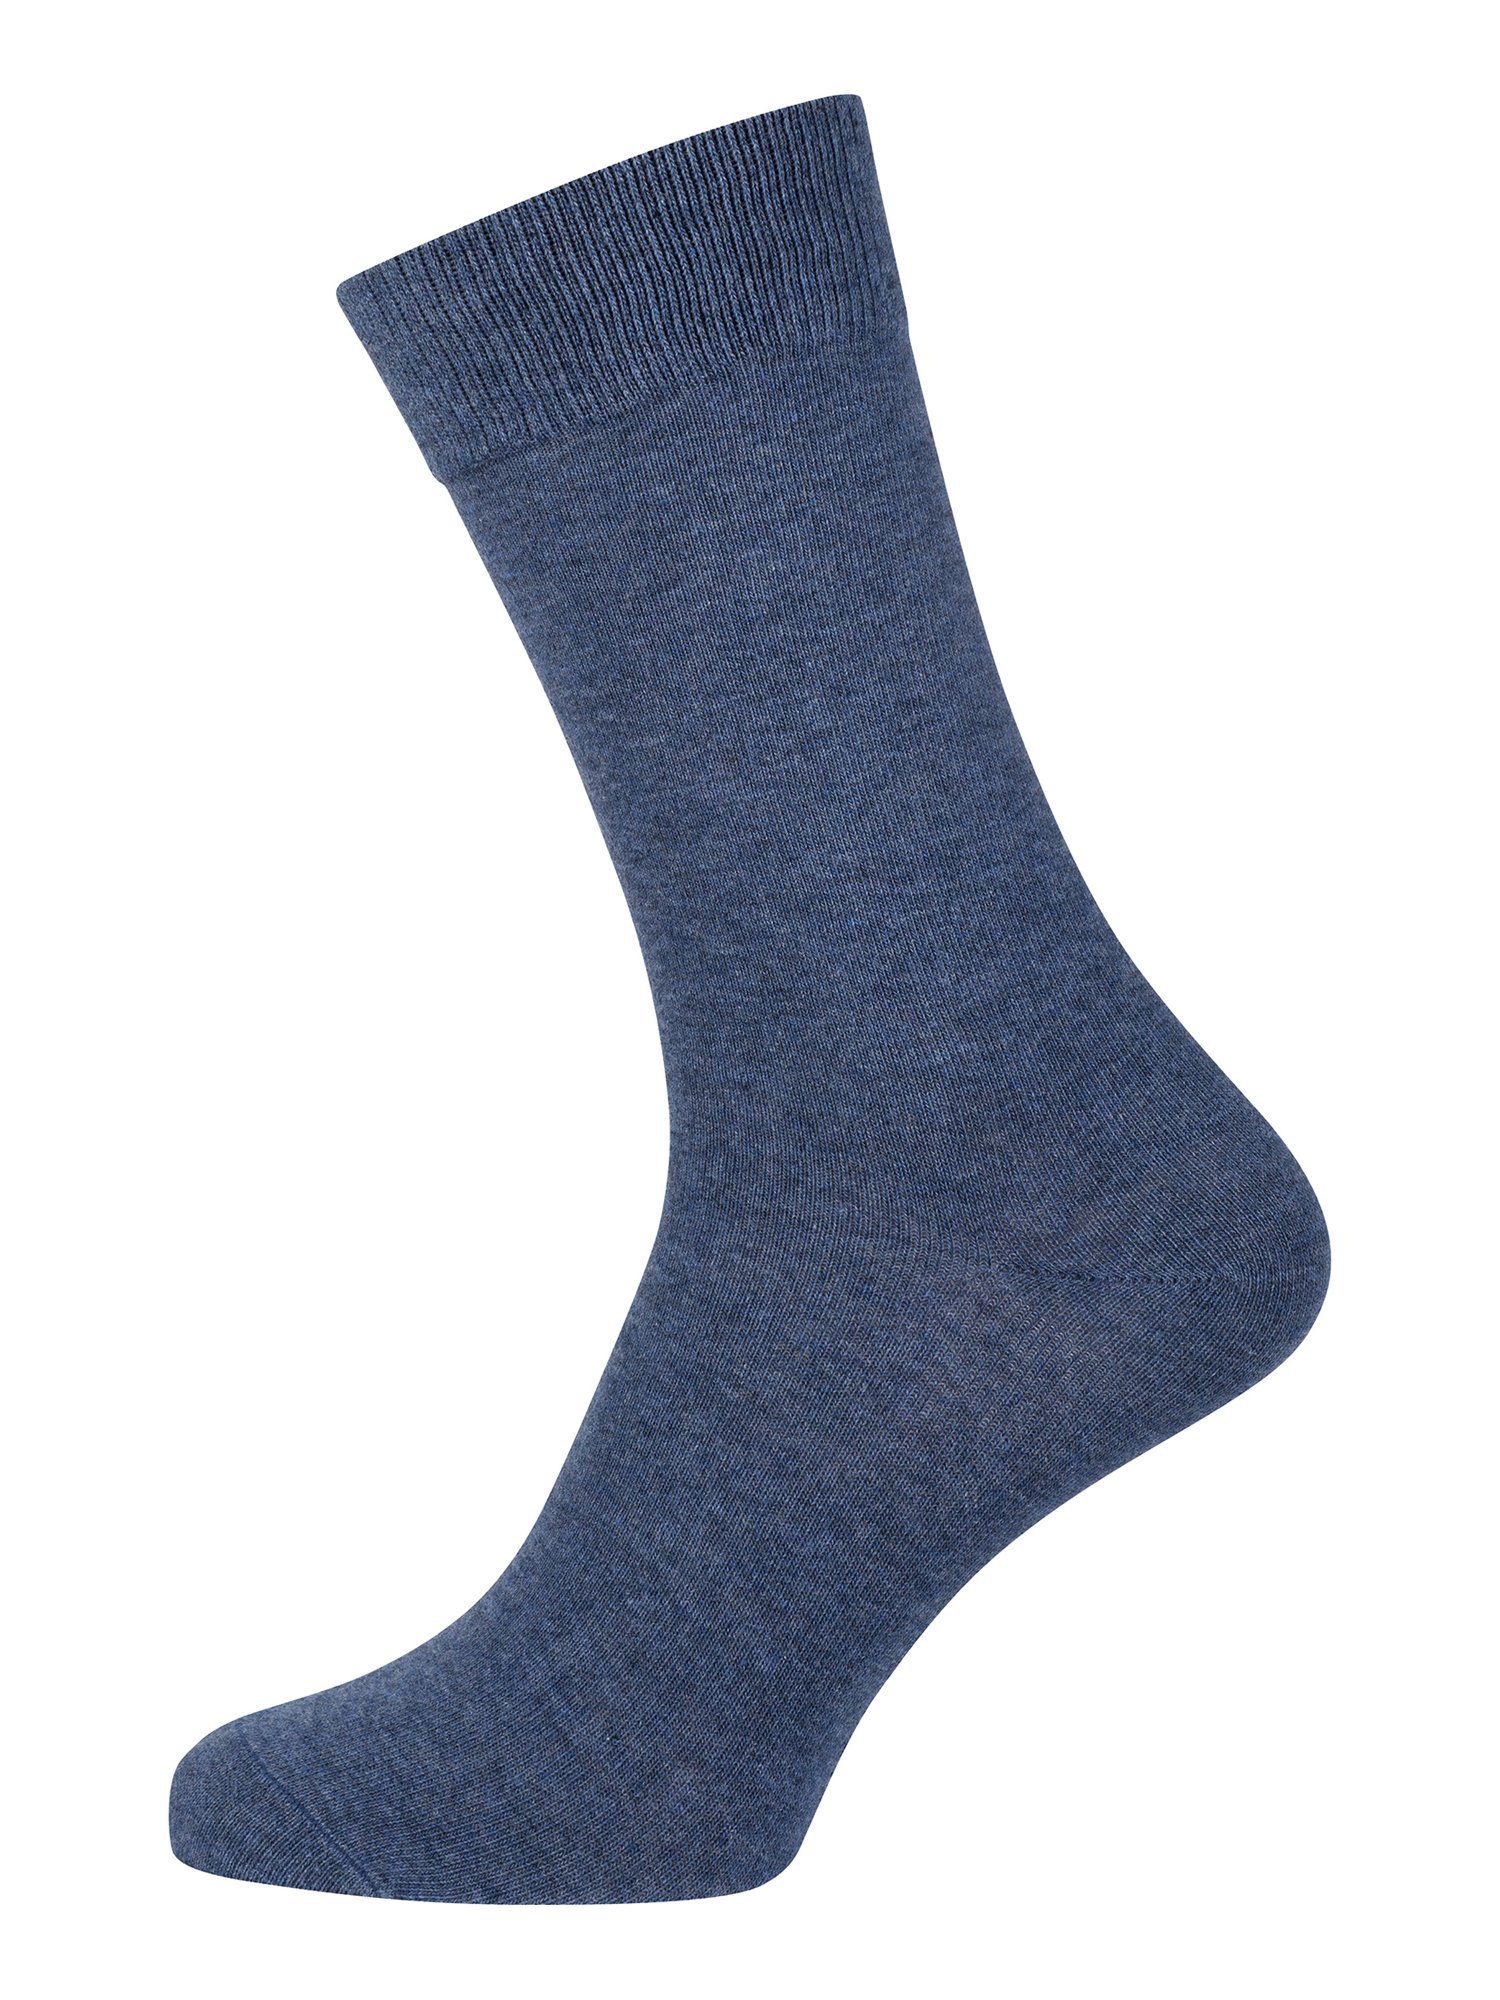 Nur Der Basicsocken günstig Socken uni (12-Paar) jeansmelange Business Baumwolle